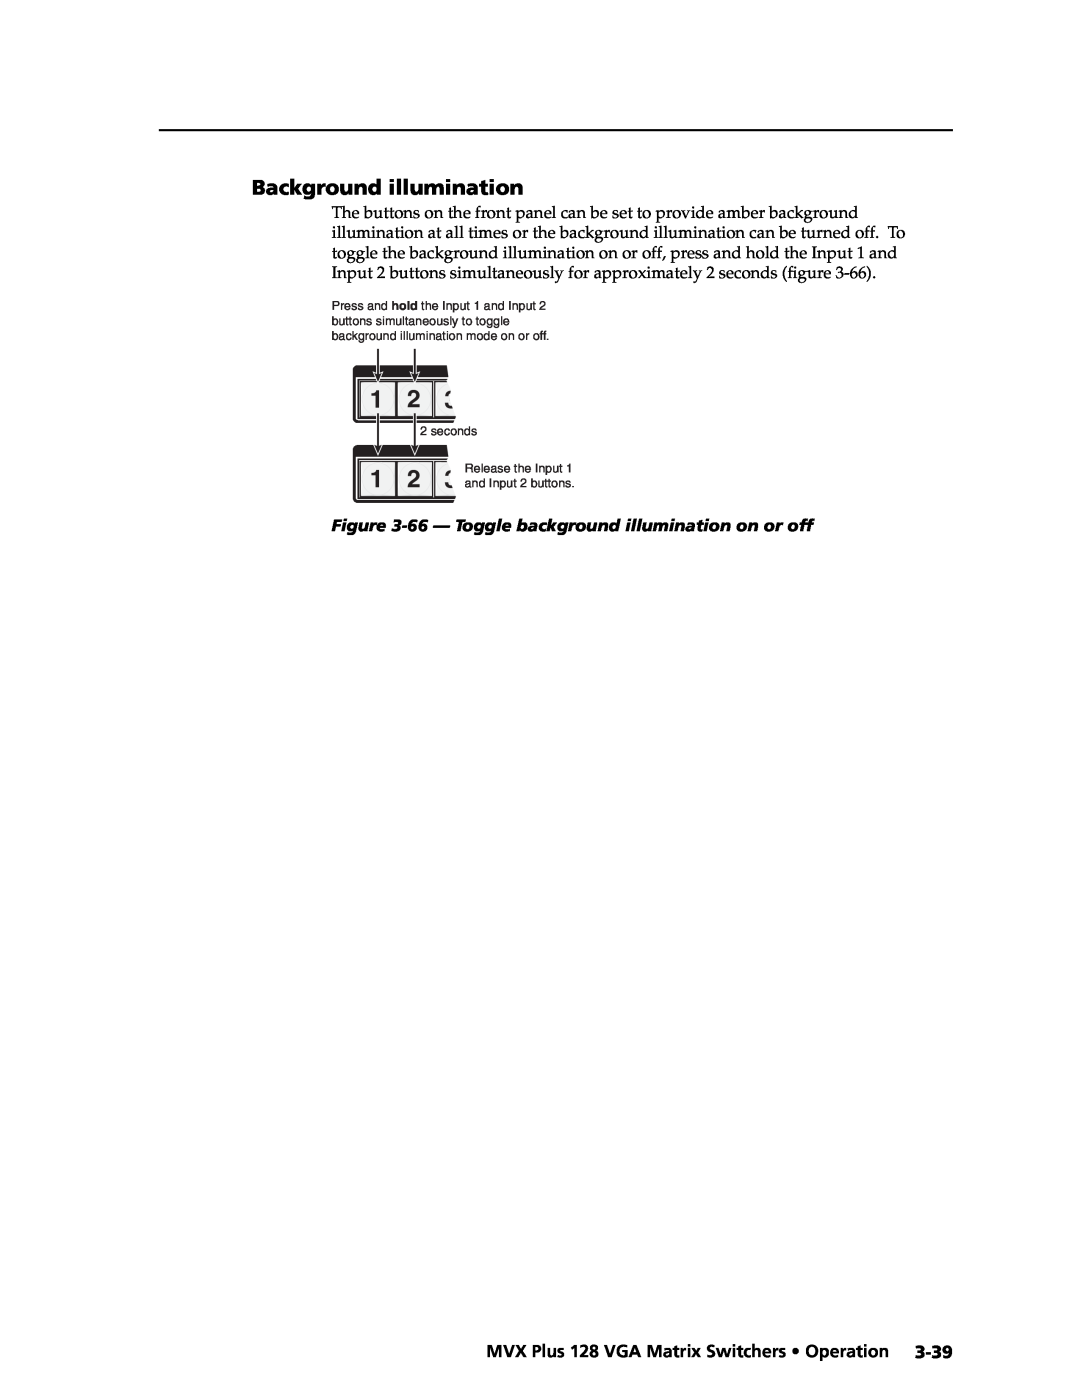 Extron electronic MVX PLUS 128 manual Background illumination, 66 - Toggle background illumination on or off 